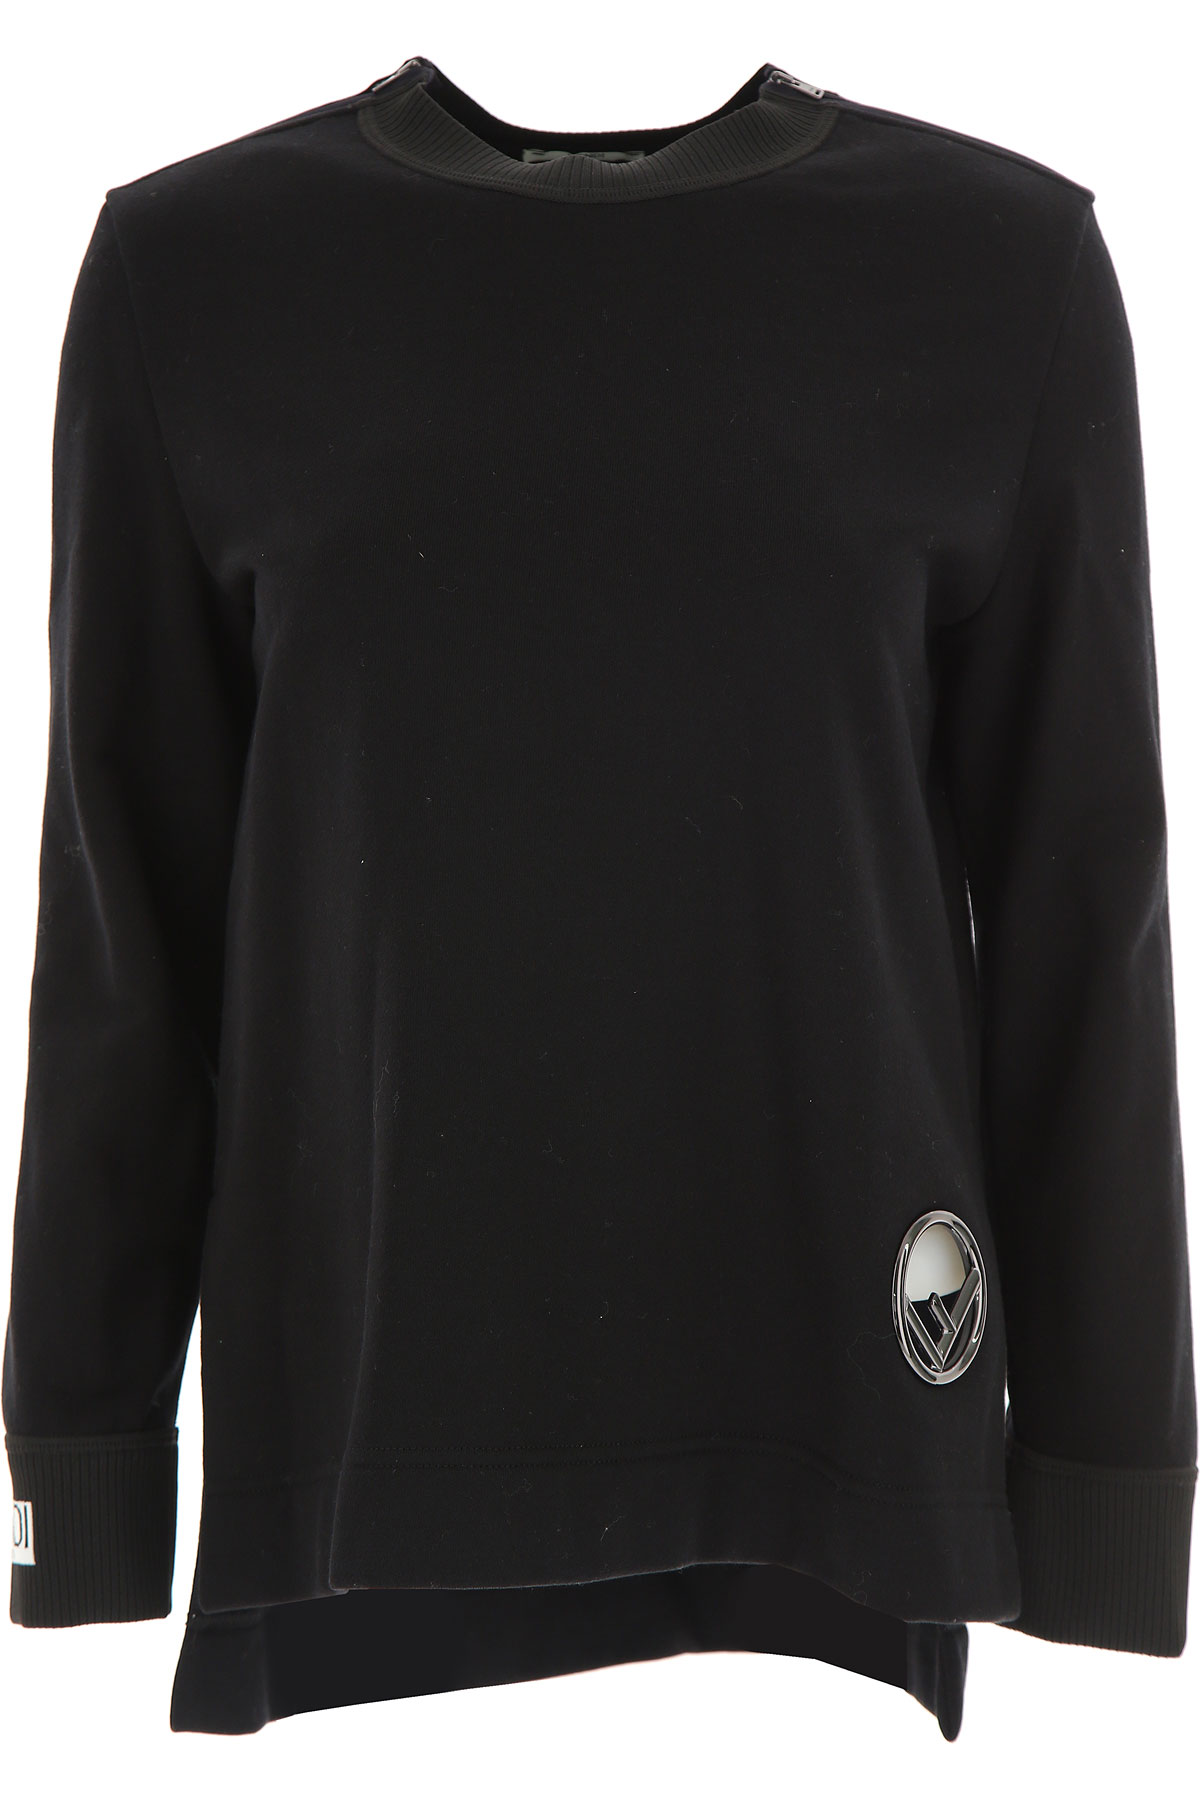 Fendi Sweatshirt for Women, Noir, Coton, 2017, 38 40 42